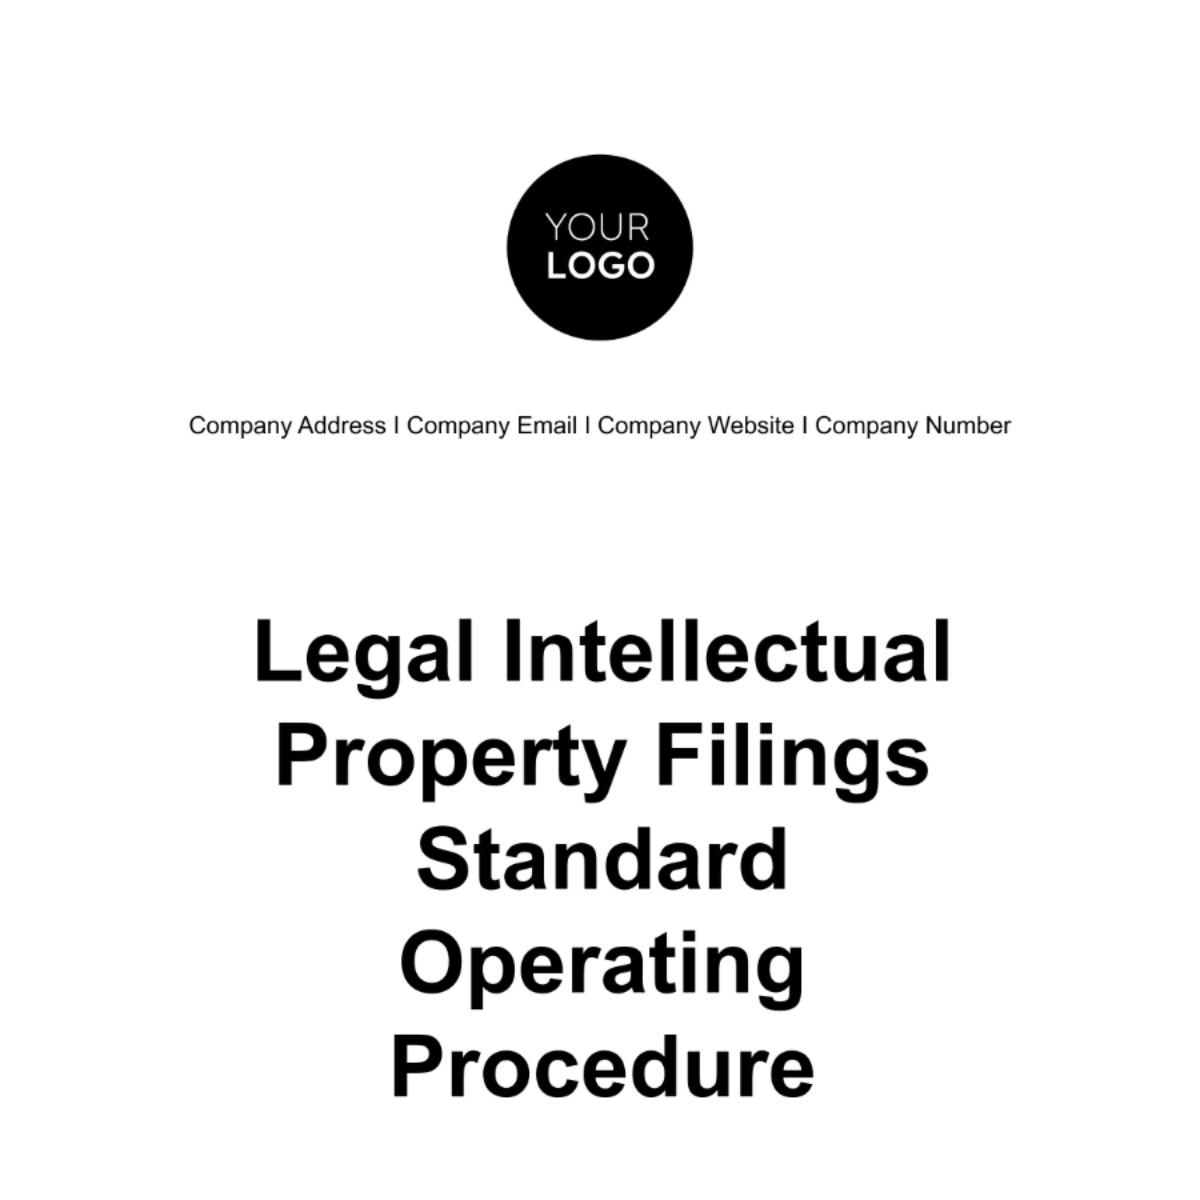 Free Legal Intellectual Property Filings Standard Operating Procedure Template